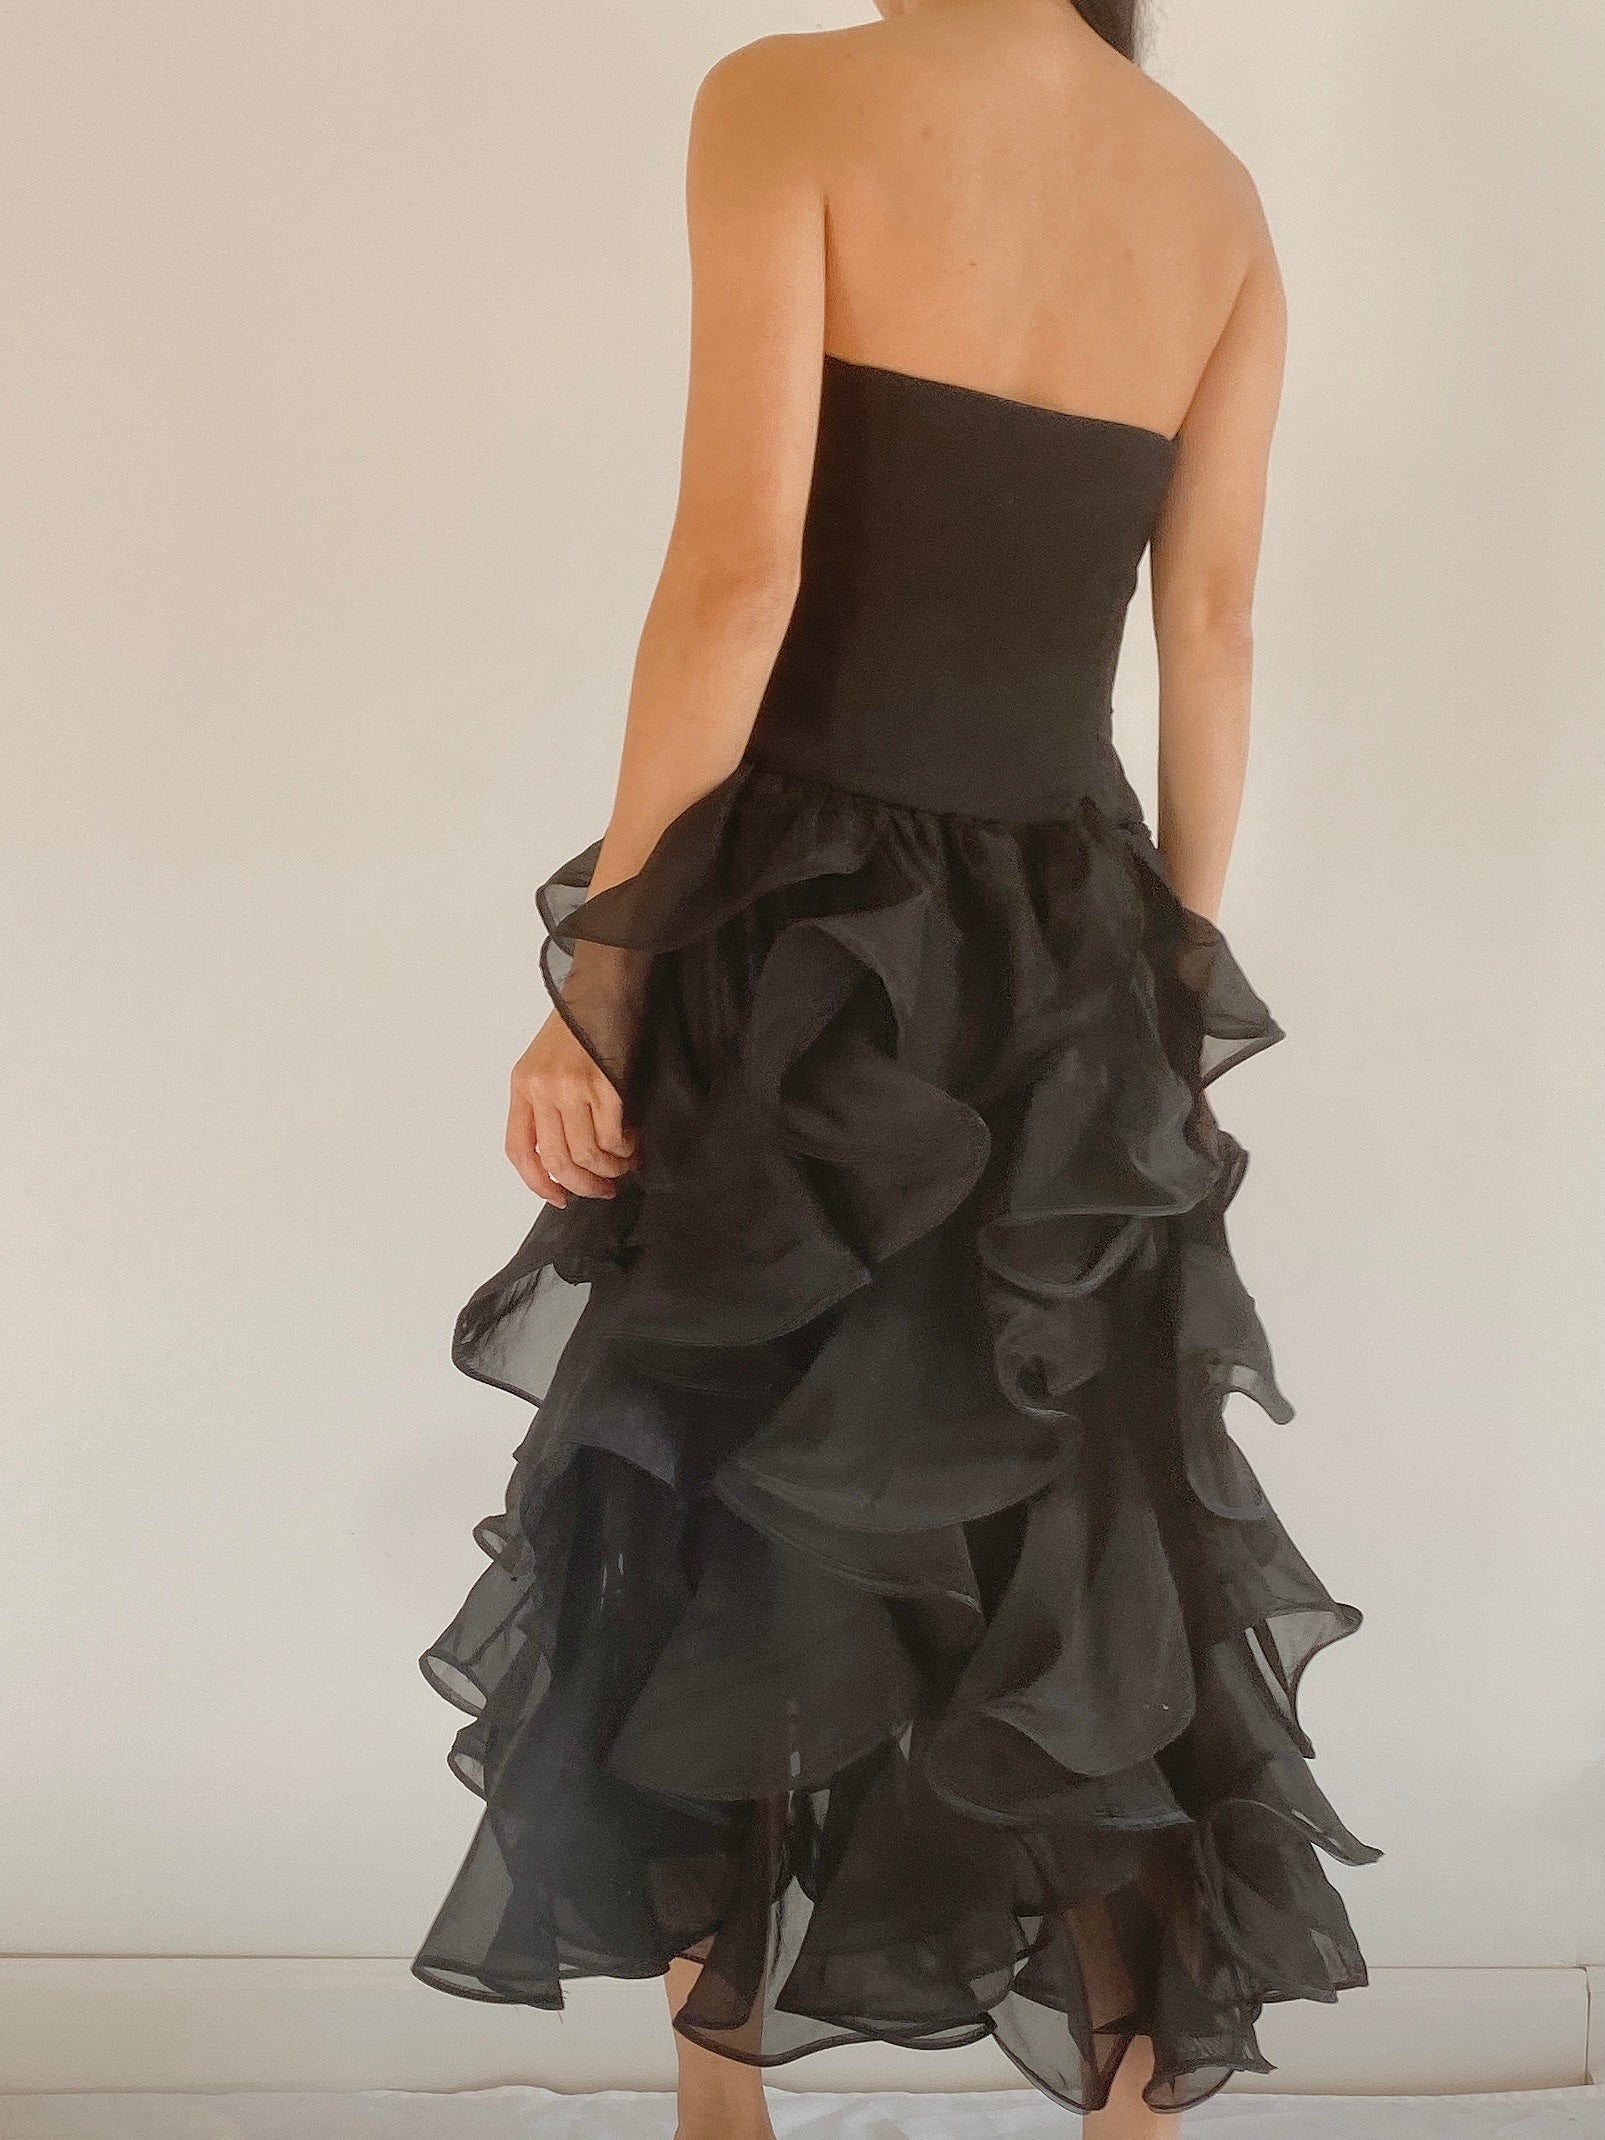 Organza black stole wrap shawl evening dress accessory - Amazon.com